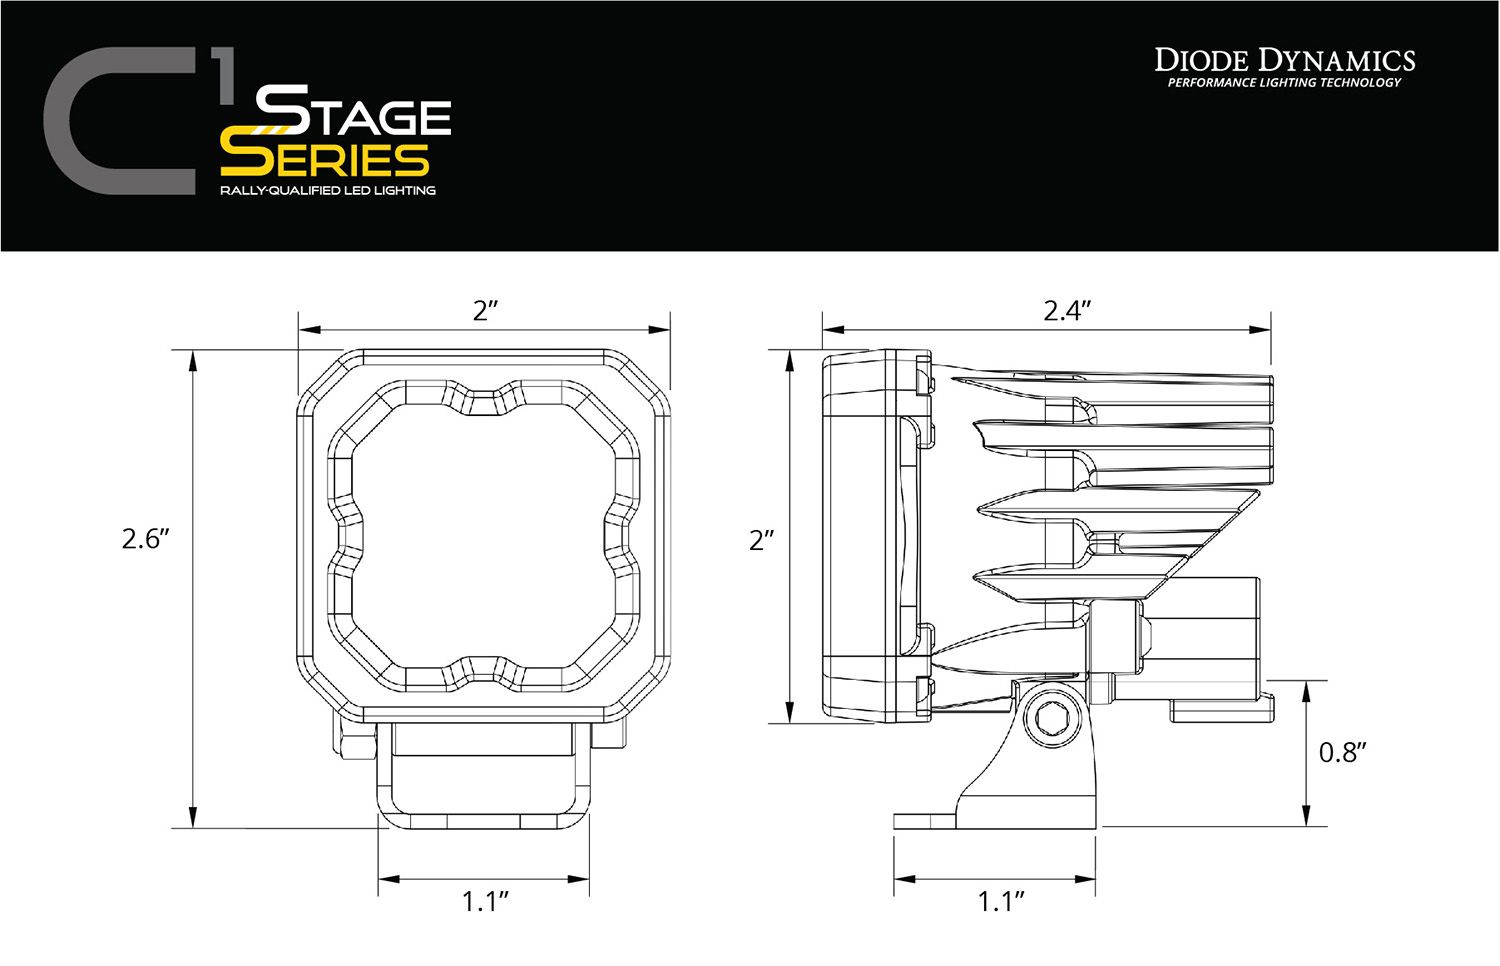 Stage Series C1 White SAE Fog Standard LED Pod (one)